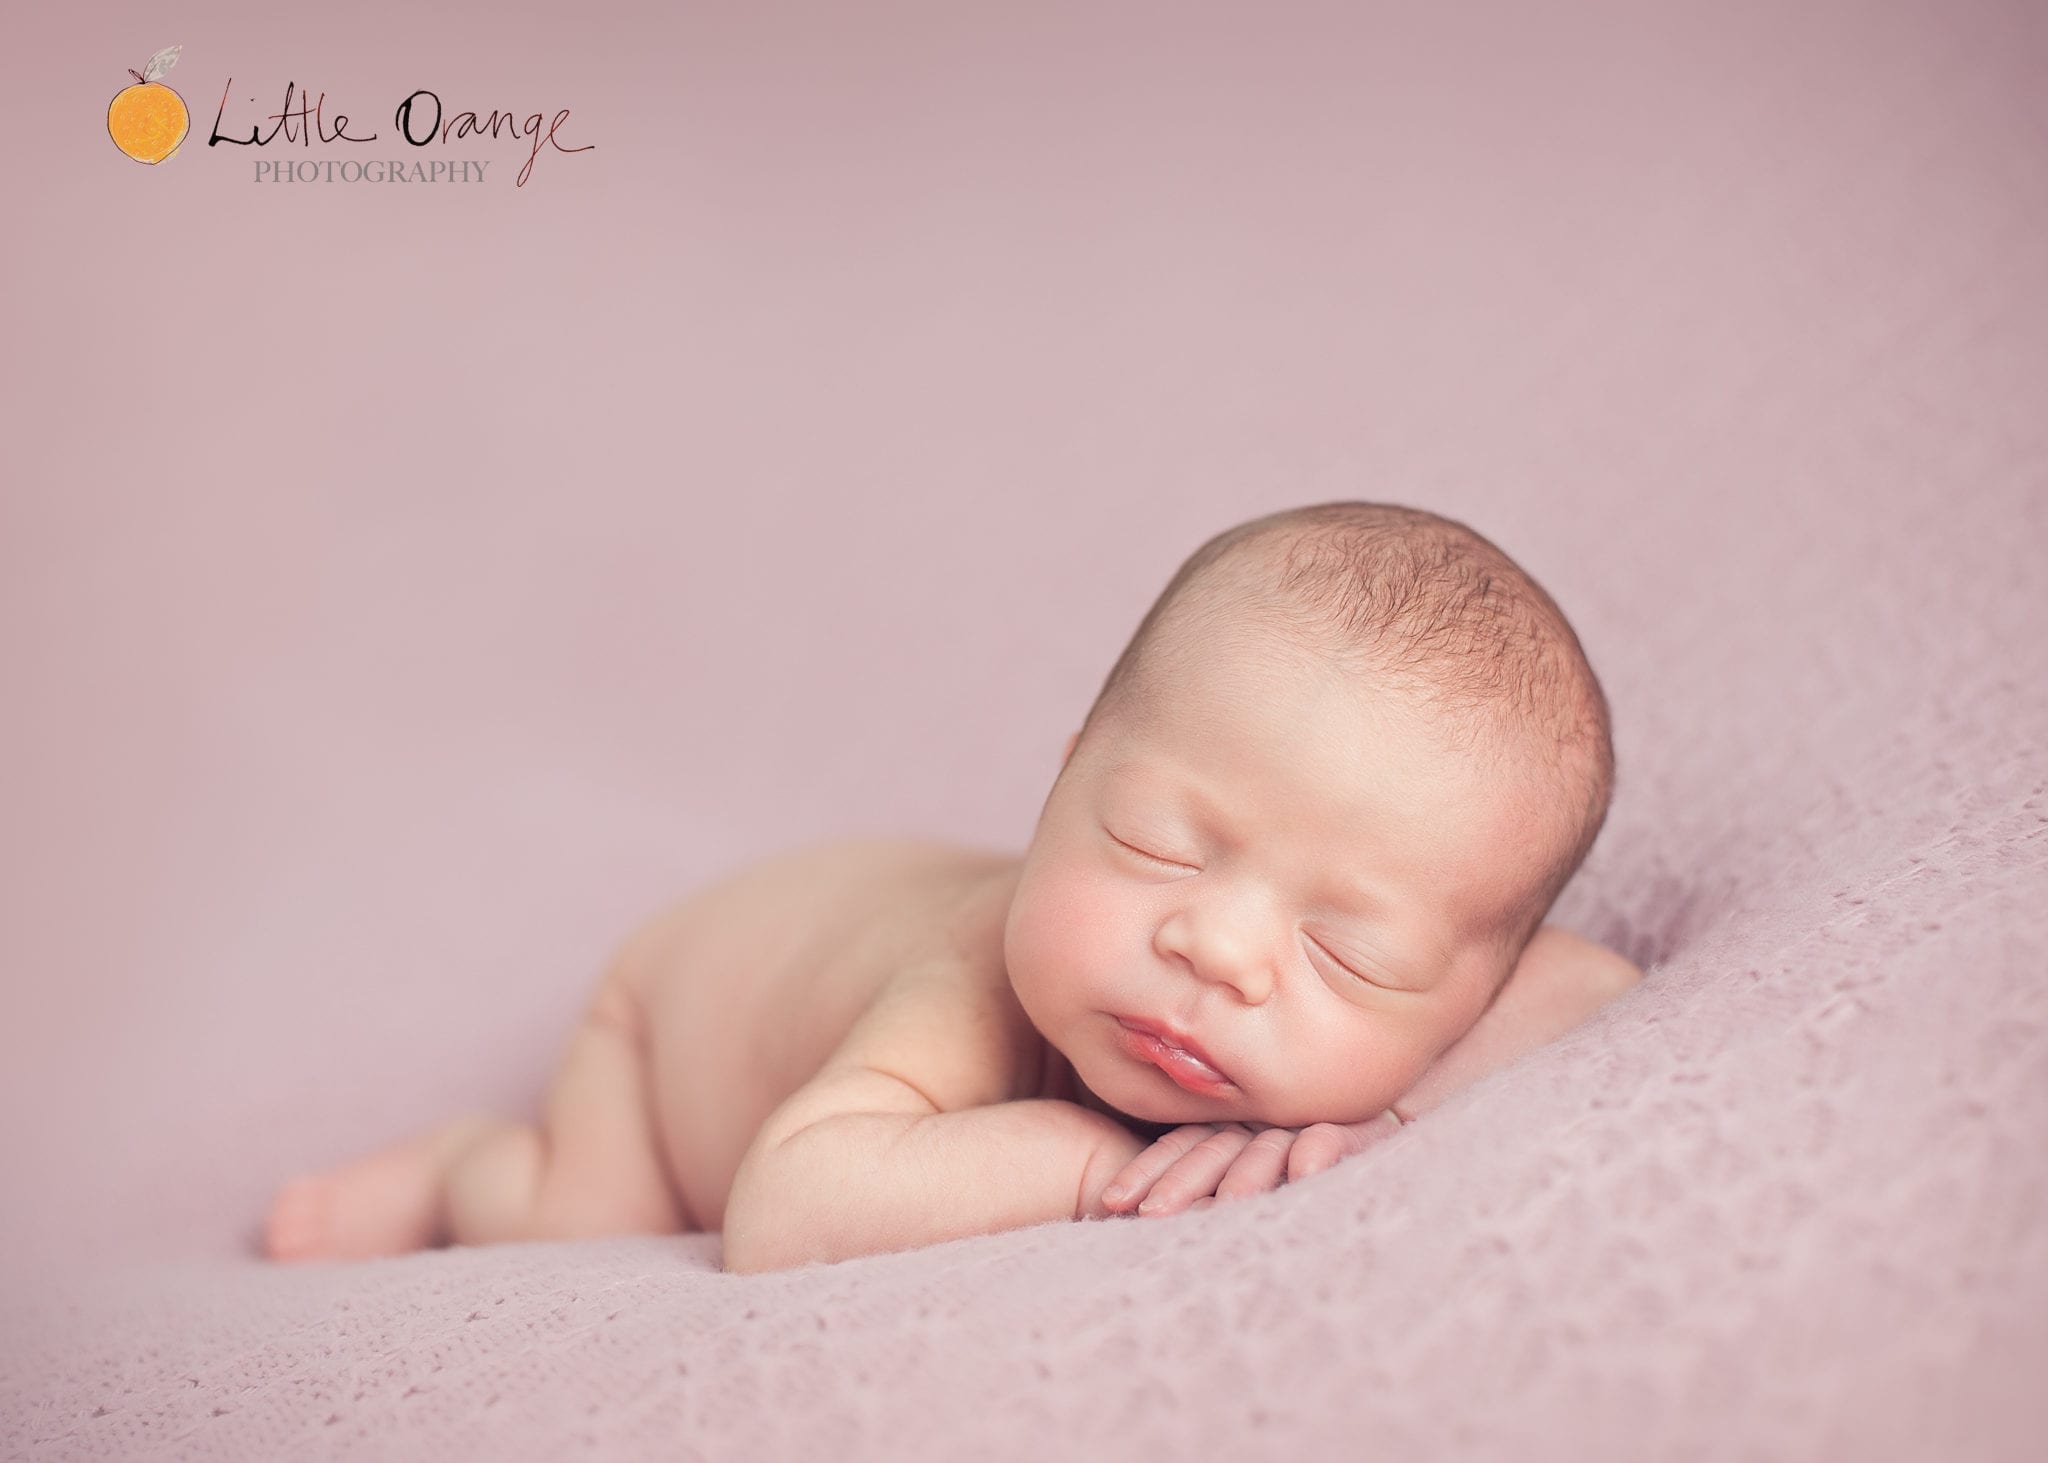 Eva – Baby Photographer Tugun